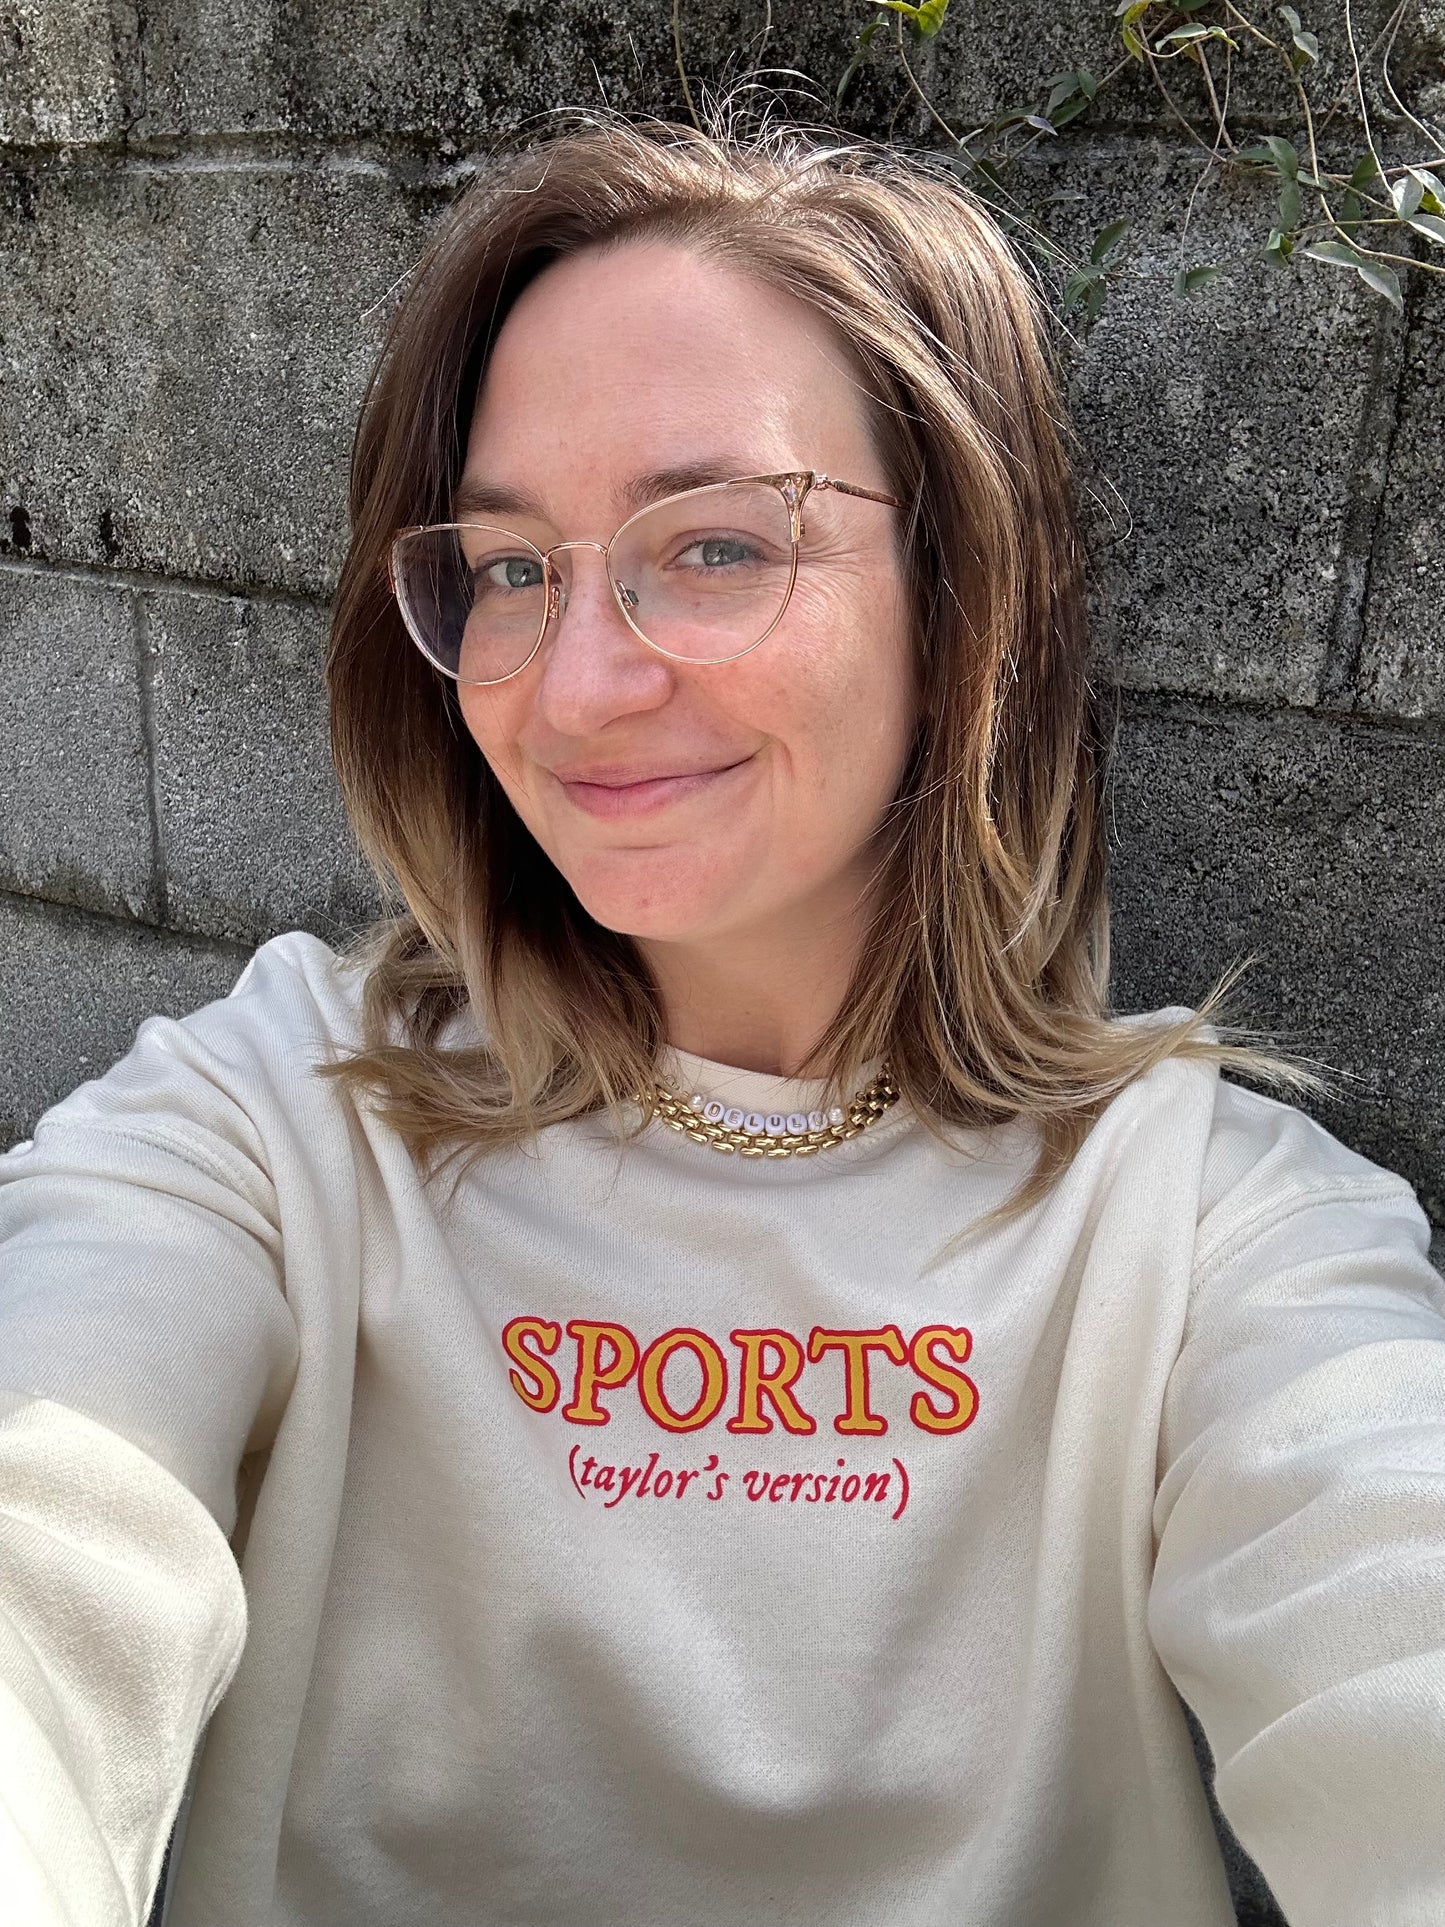 SPORTS (taylor’s version) sweatshirt